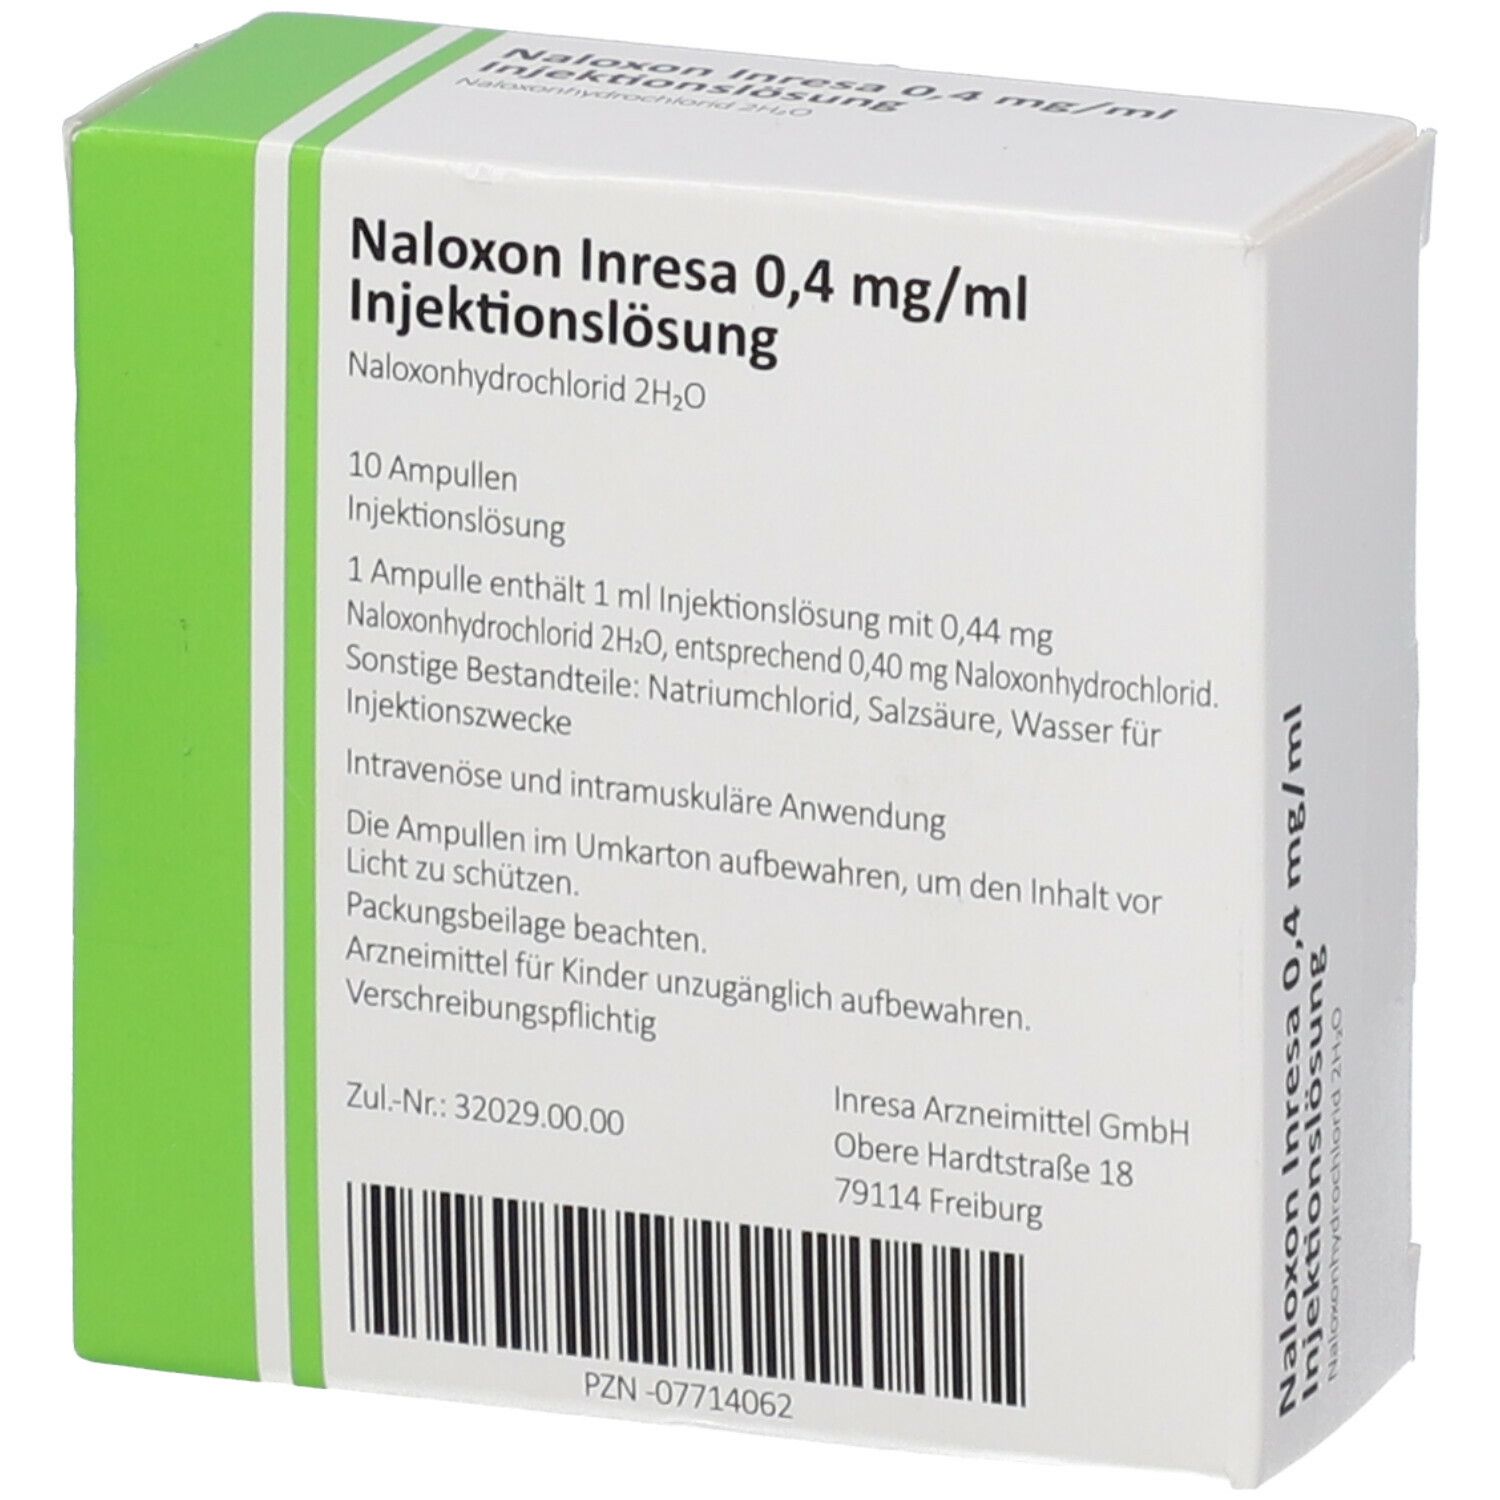 Naloxon Inresa 0,4 mg